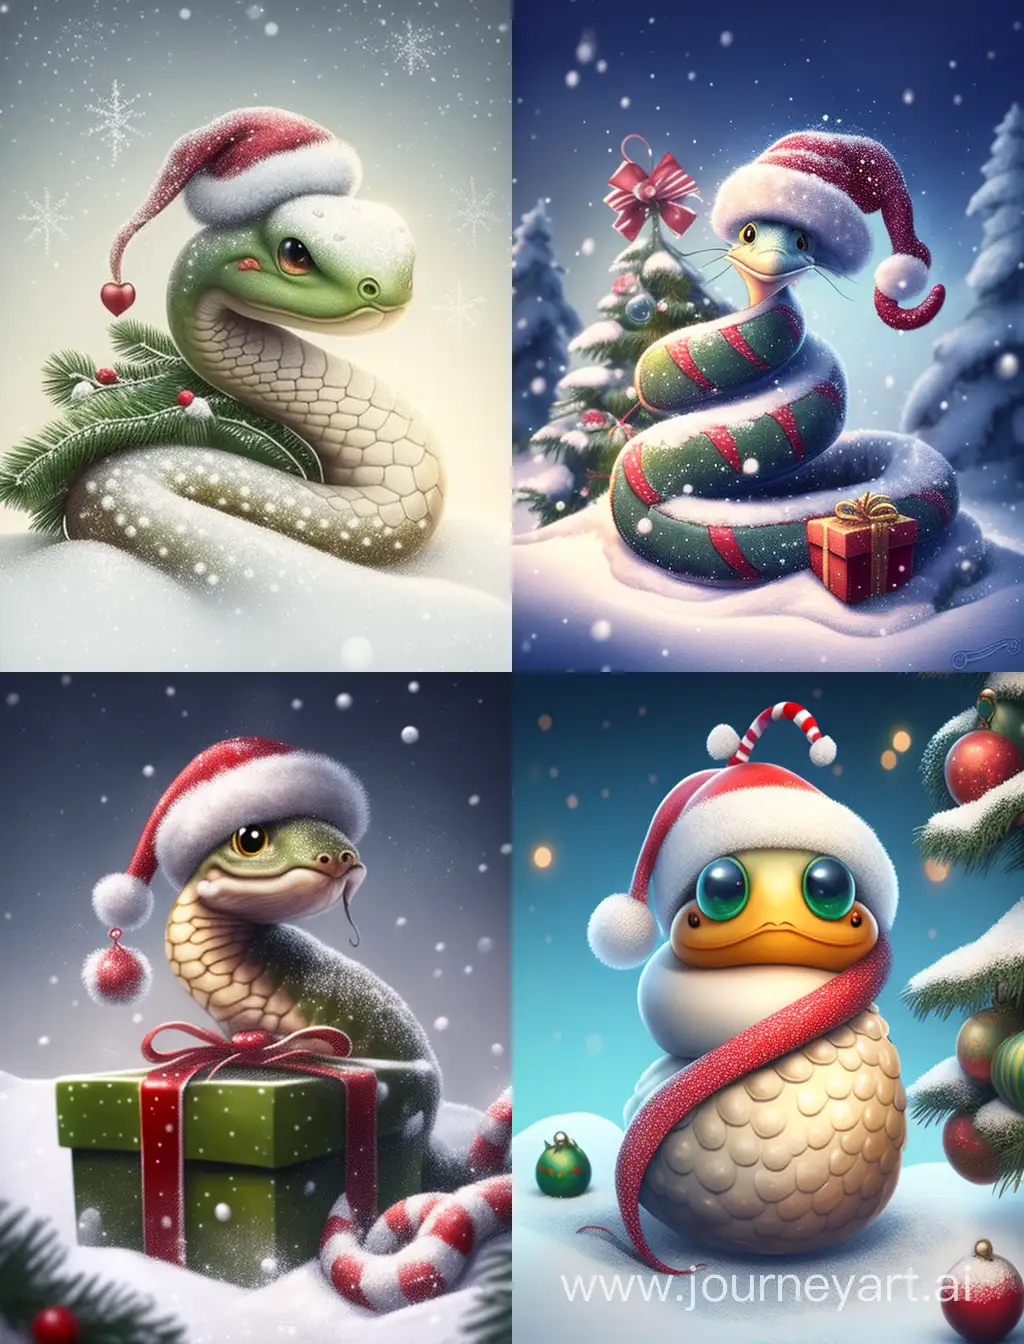 2025-Symbolic-Snake-in-Santa-Hat-Amidst-Christmas-Presents-and-Snowfall